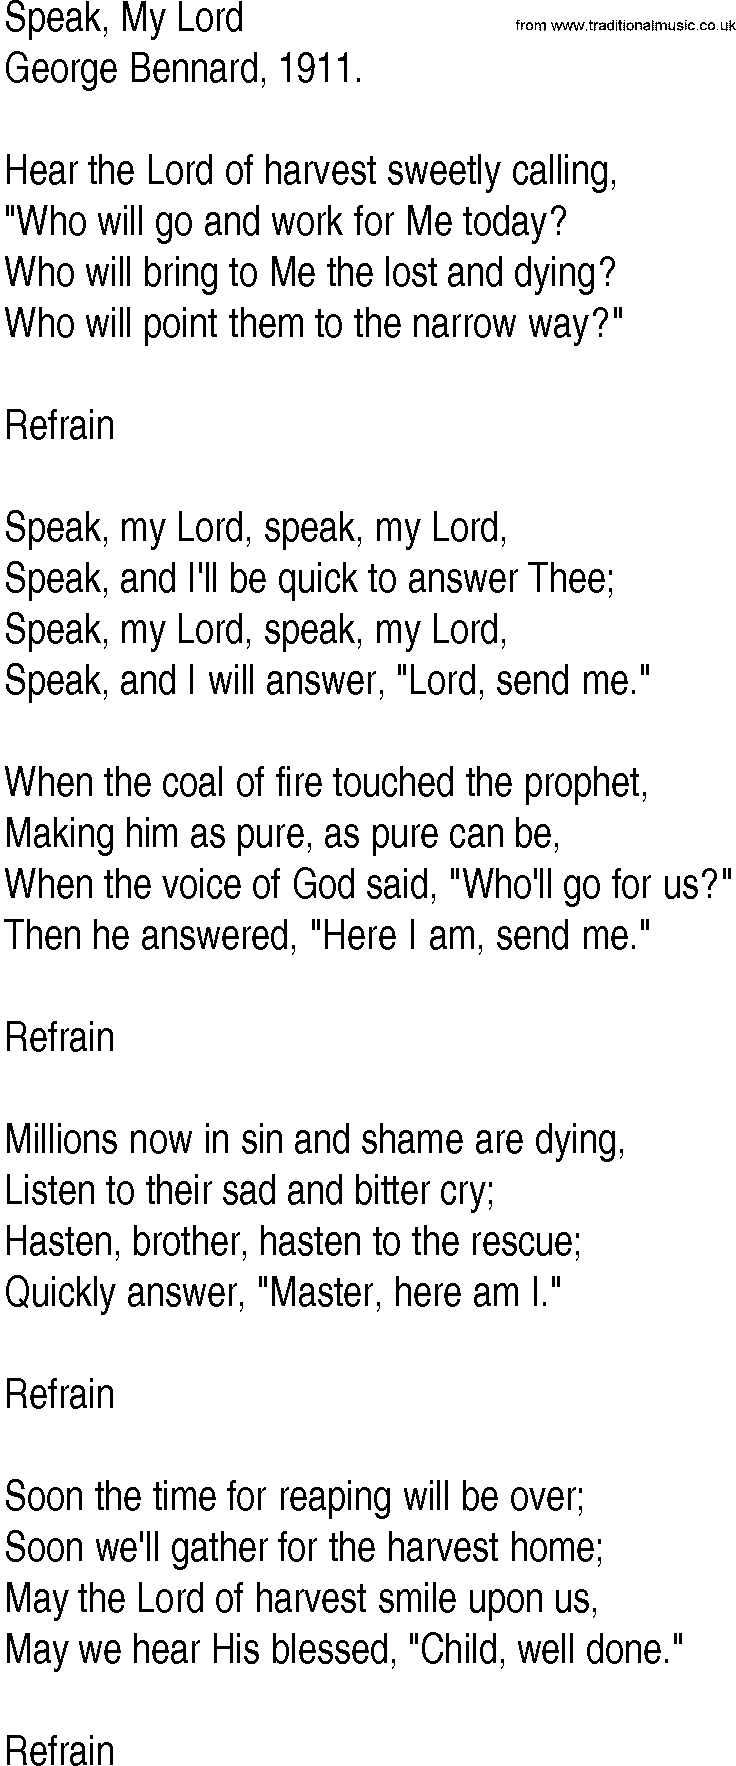 Hymn and Gospel Song: Speak, My Lord by George Bennard lyrics